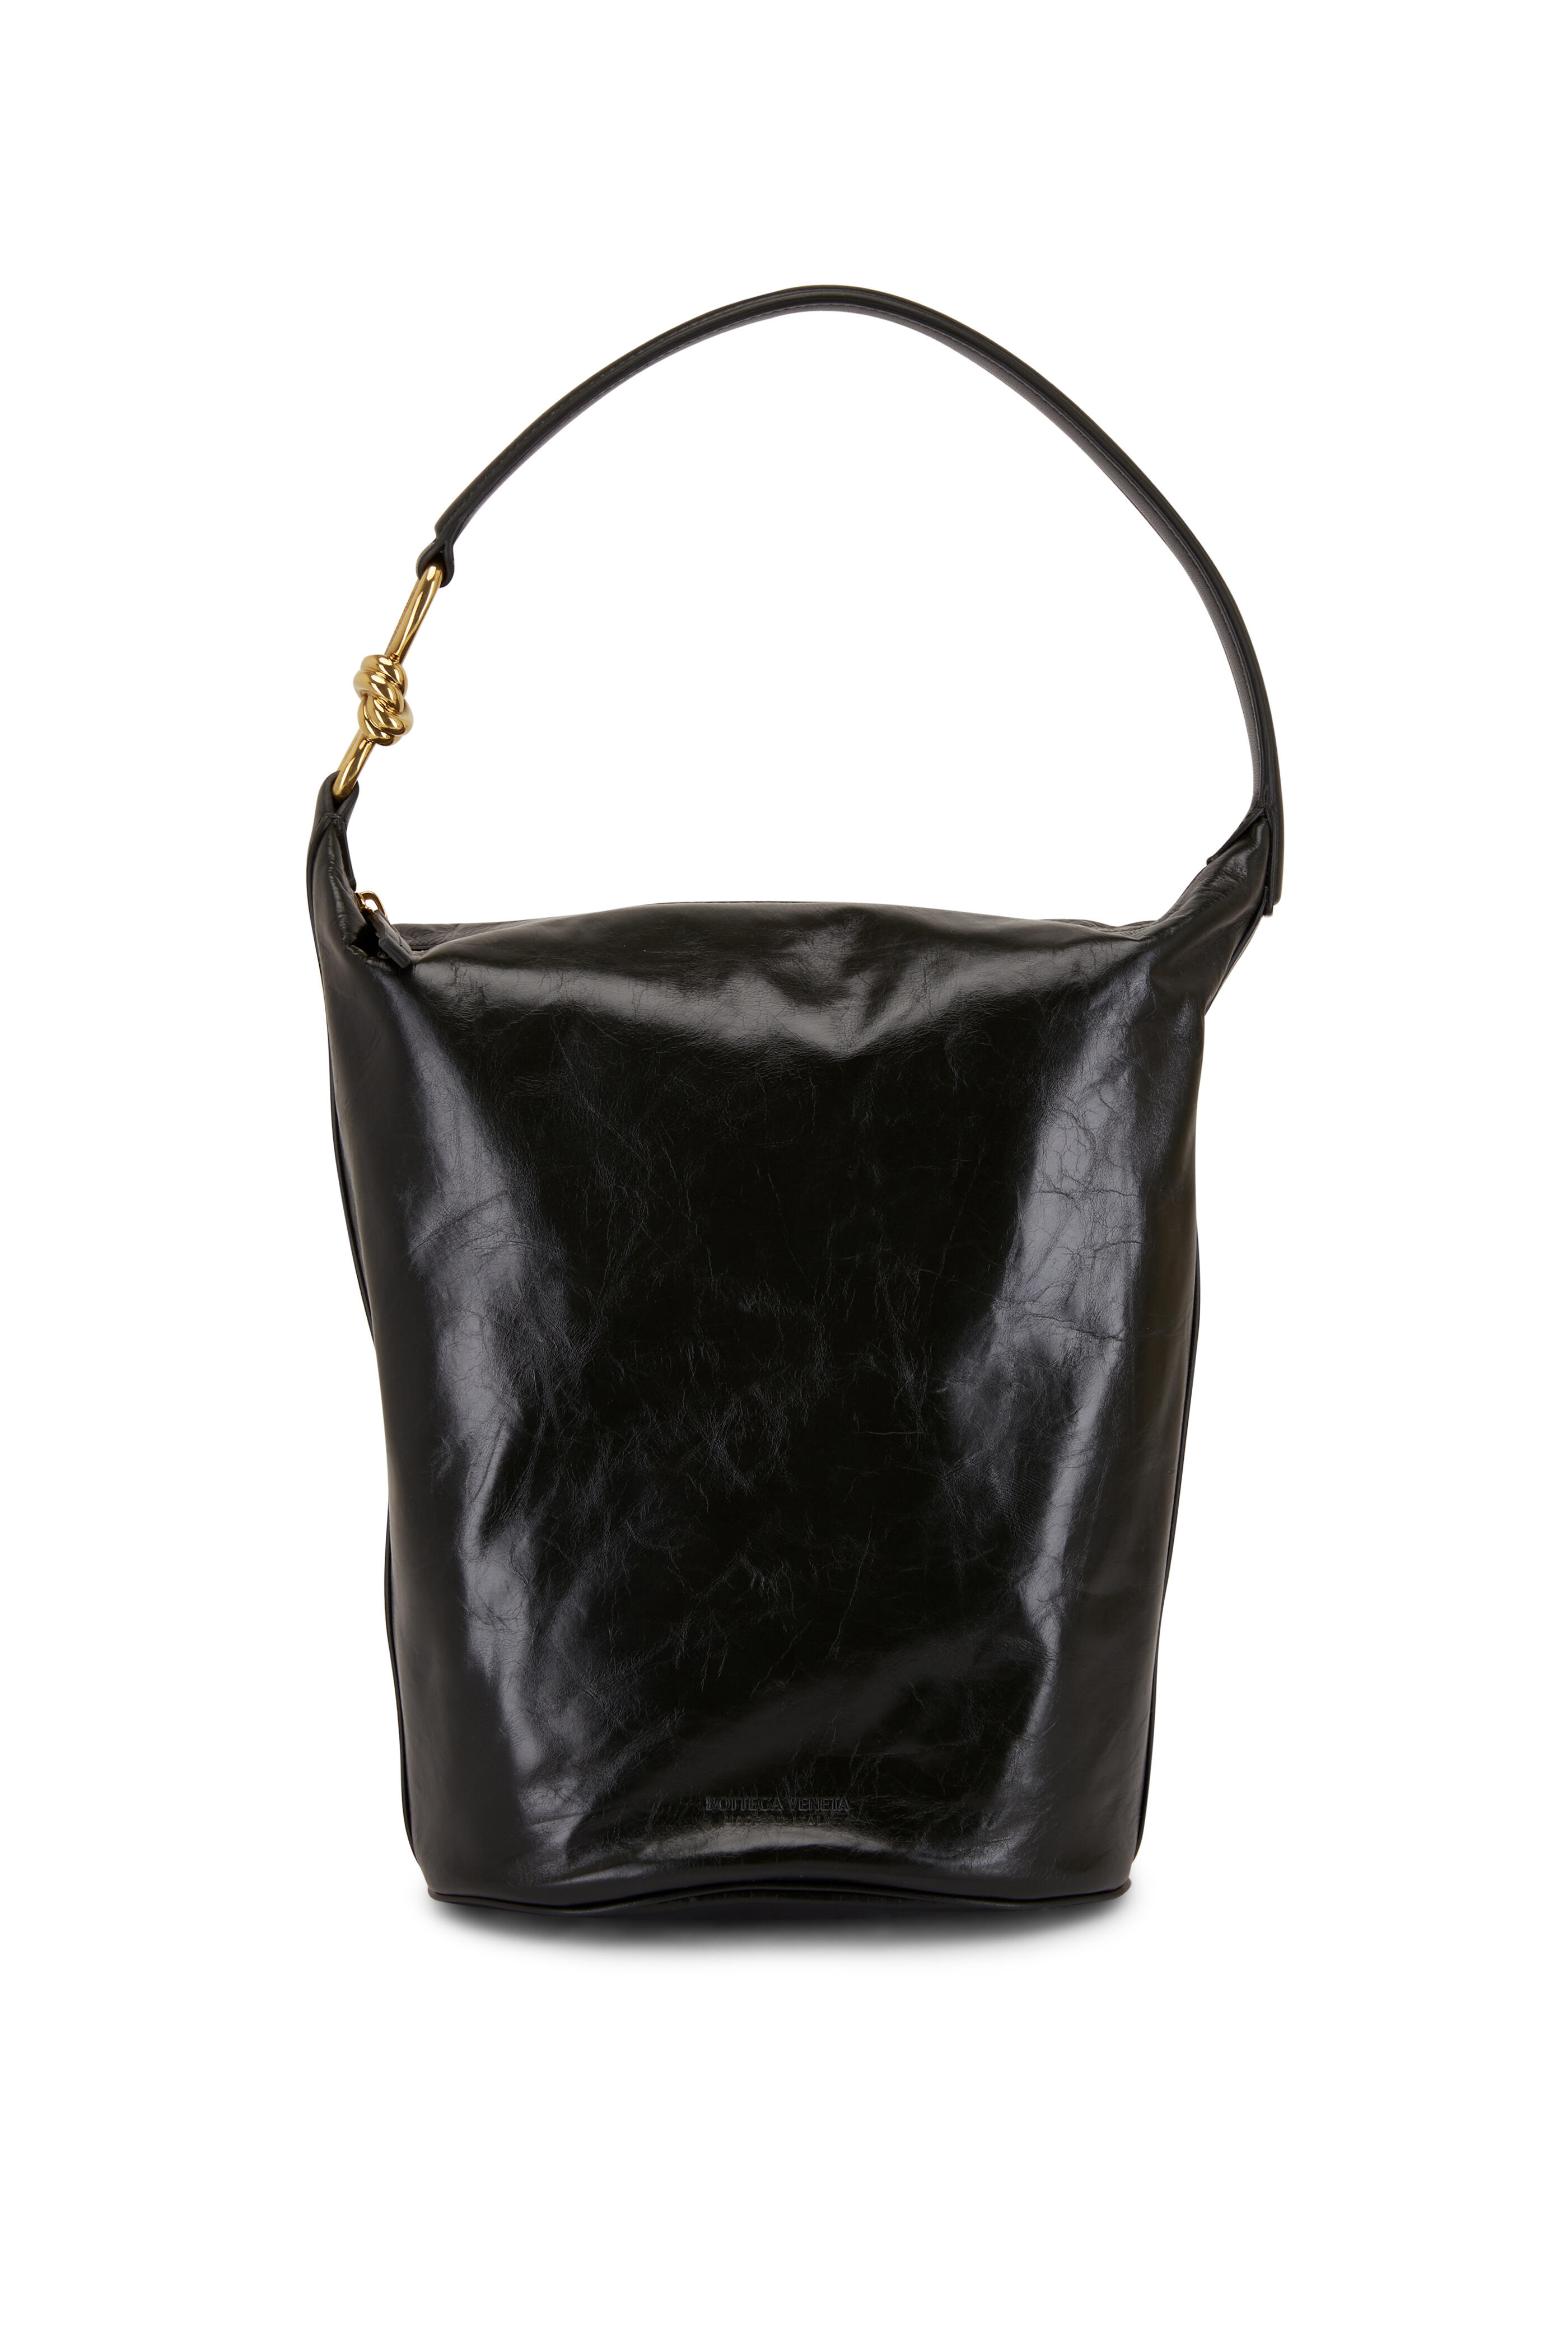 Bottega Veneta Women's Knot Leather Shoulder Bag